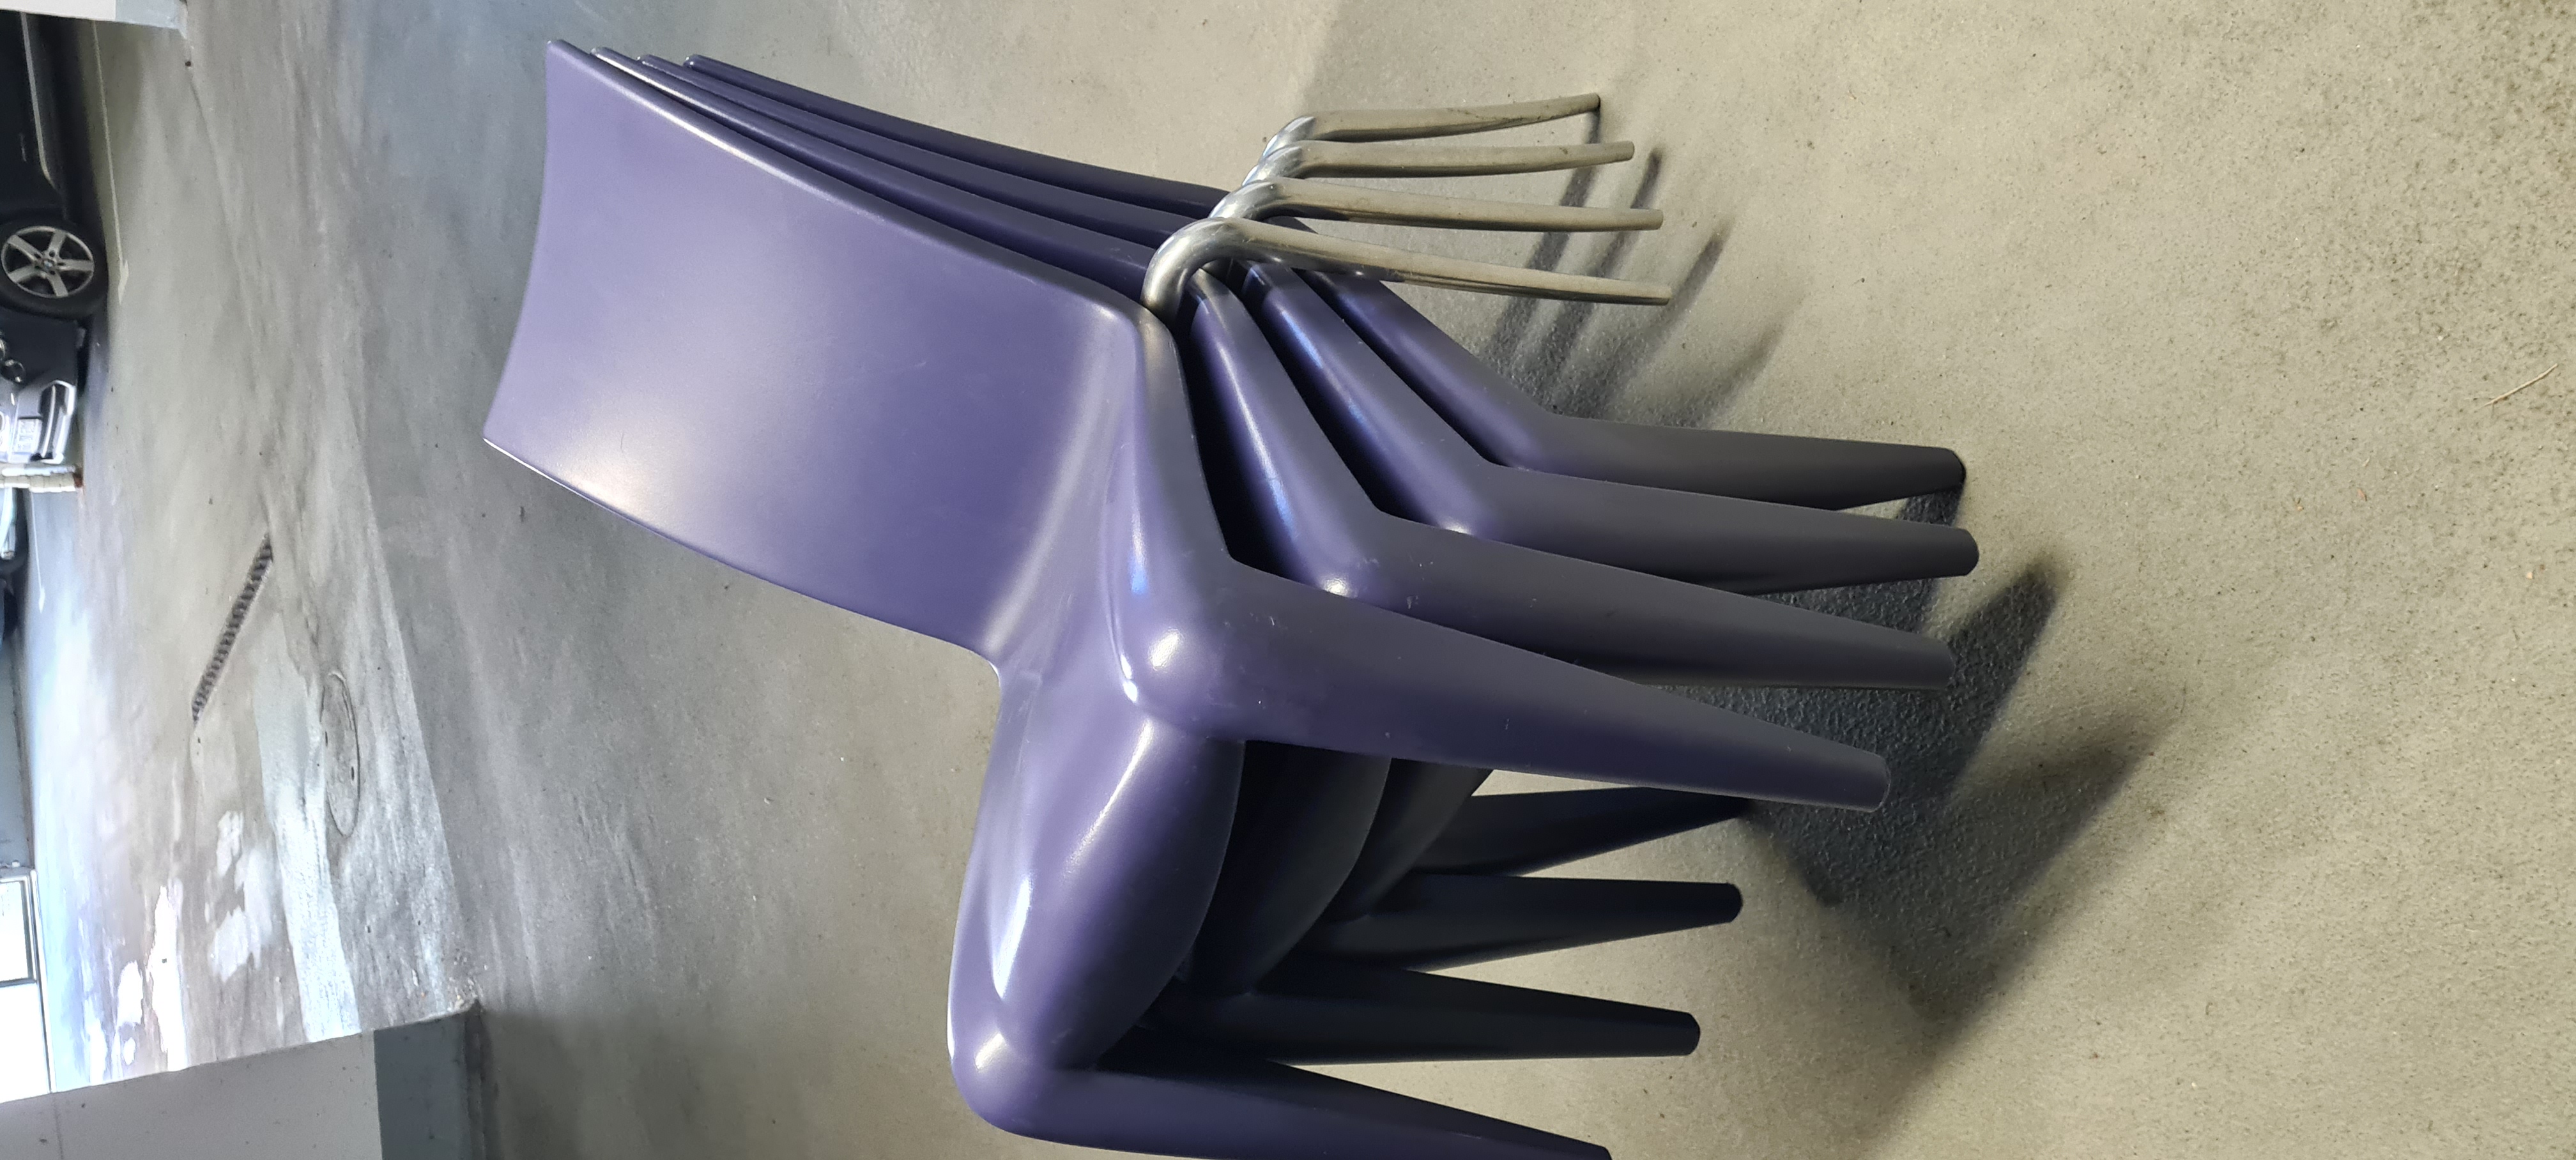 4x Louis 20 Stuhl by Philipp Starck Kunststoff Violett